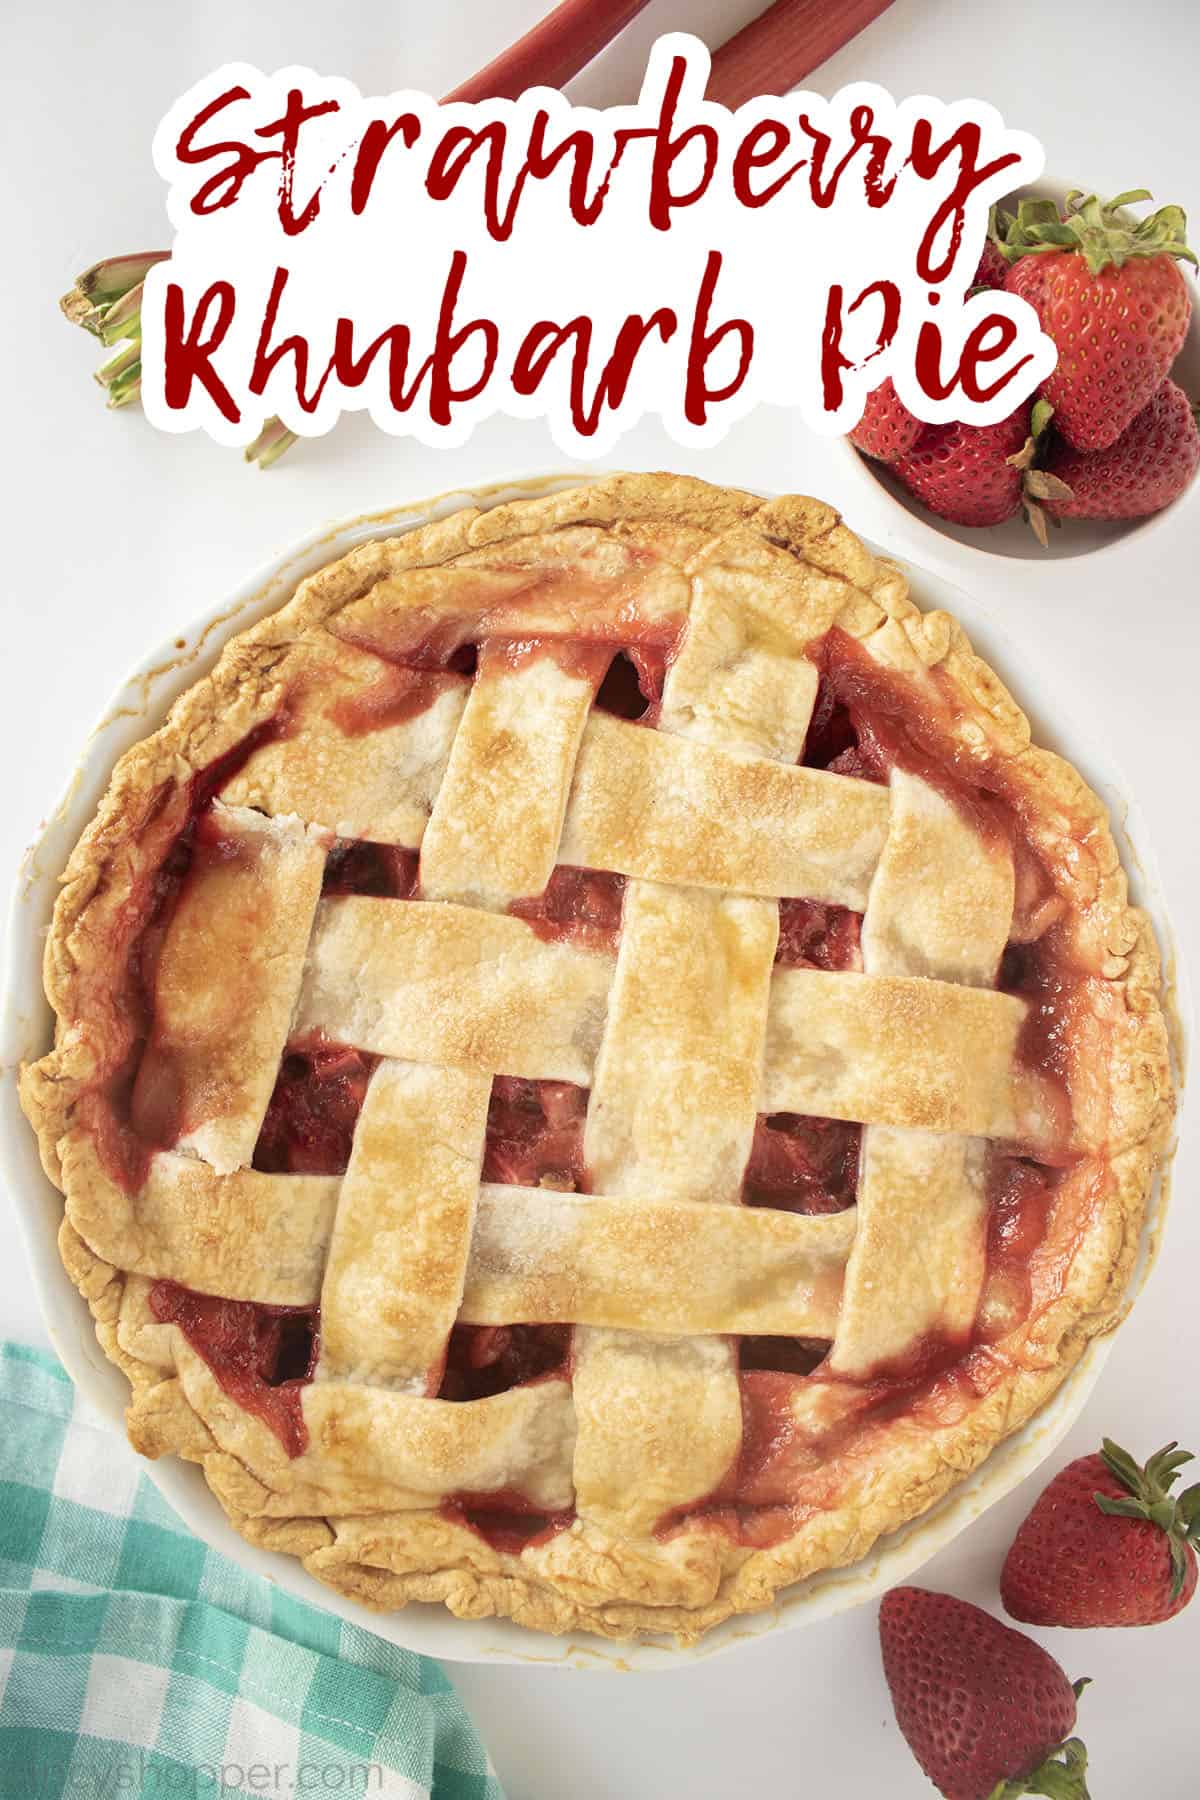 Text on image Strawberry Rhubarb Pie